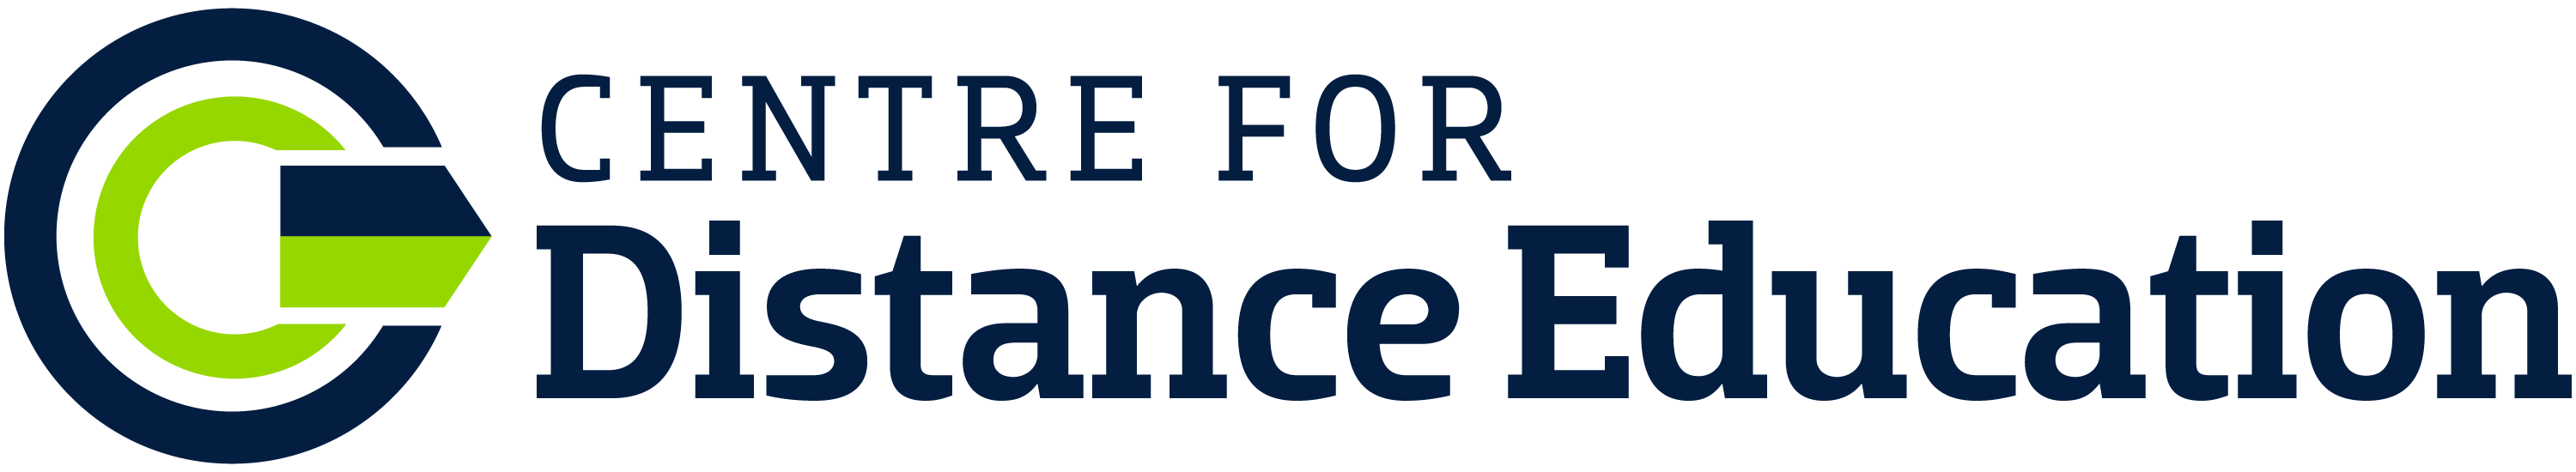 Centre for Distance Education Logo